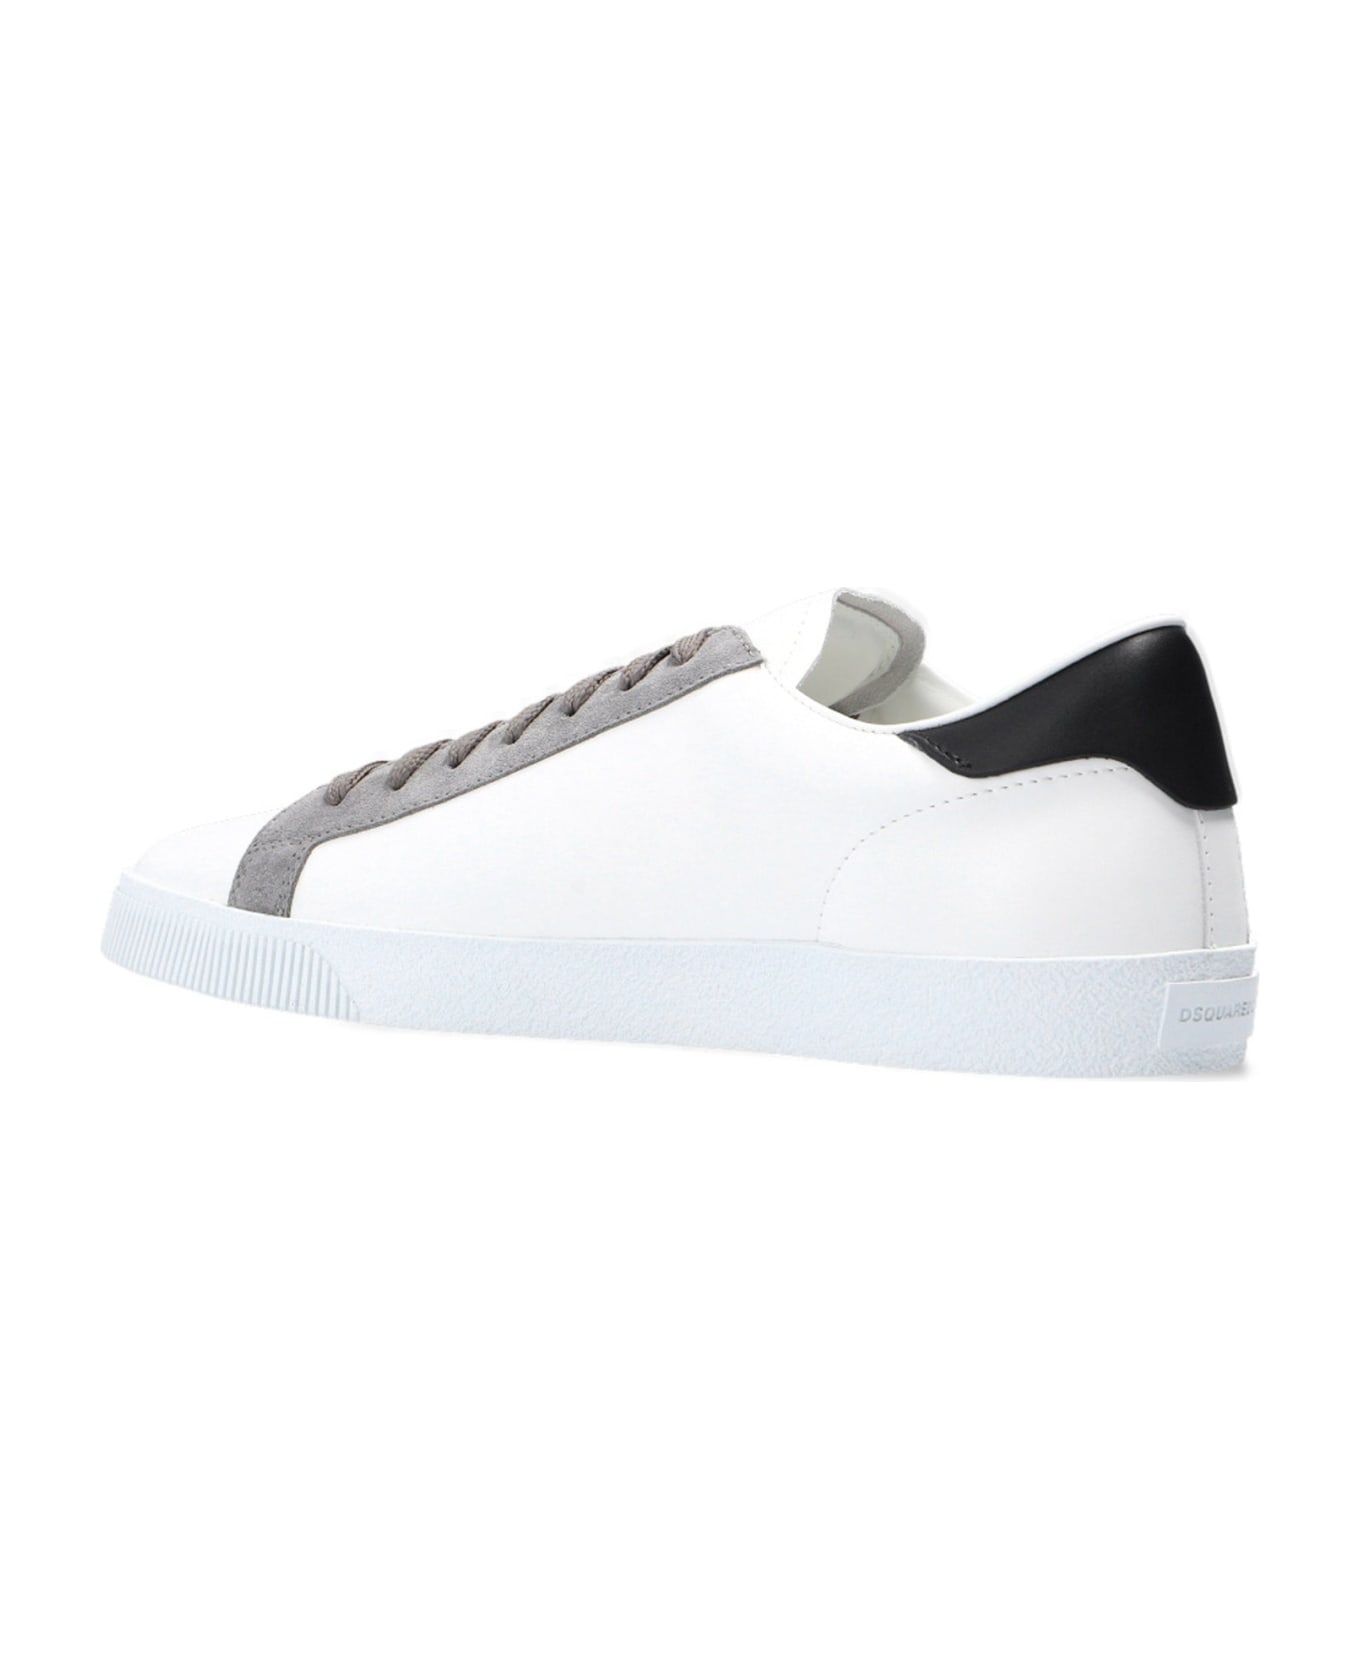 Dsquared2 Icon Cassetta Leather Sneakers - White